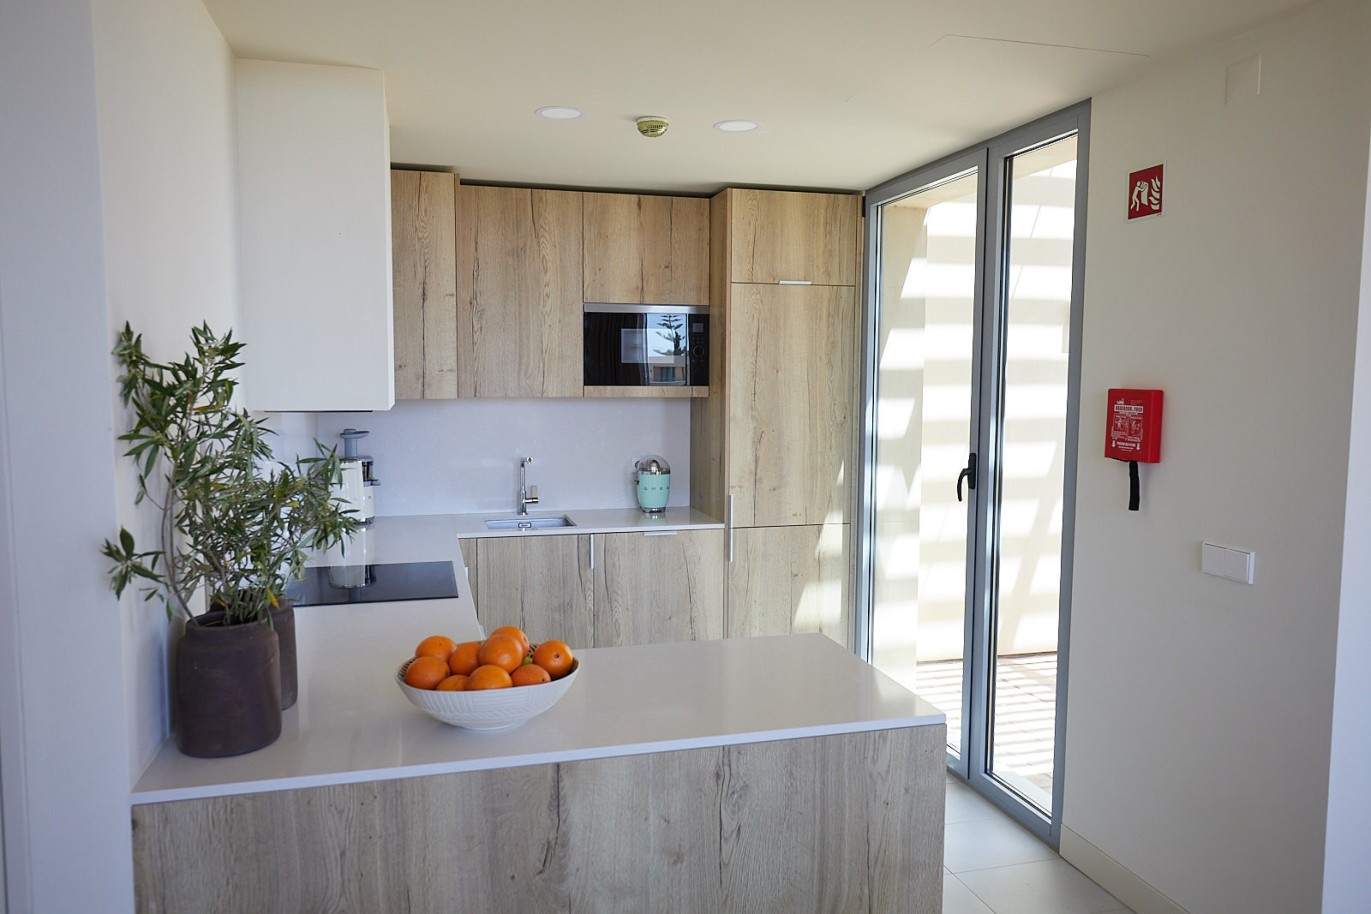 2 bedroom apartment in resort, for sale in Porches, Algarve_230597